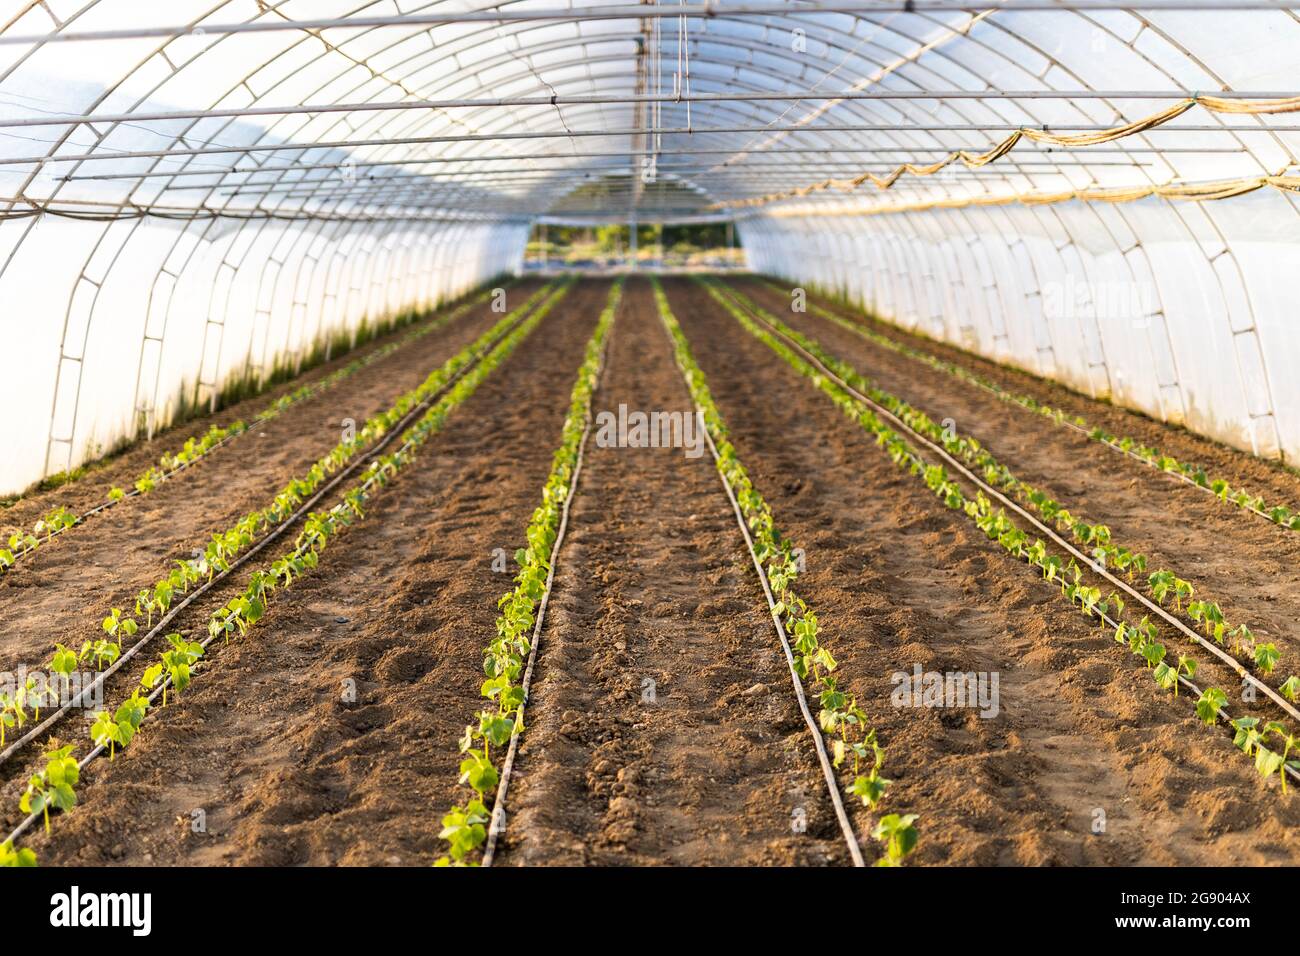 Interior of greenhouse with fresh organic plants Stock Photo